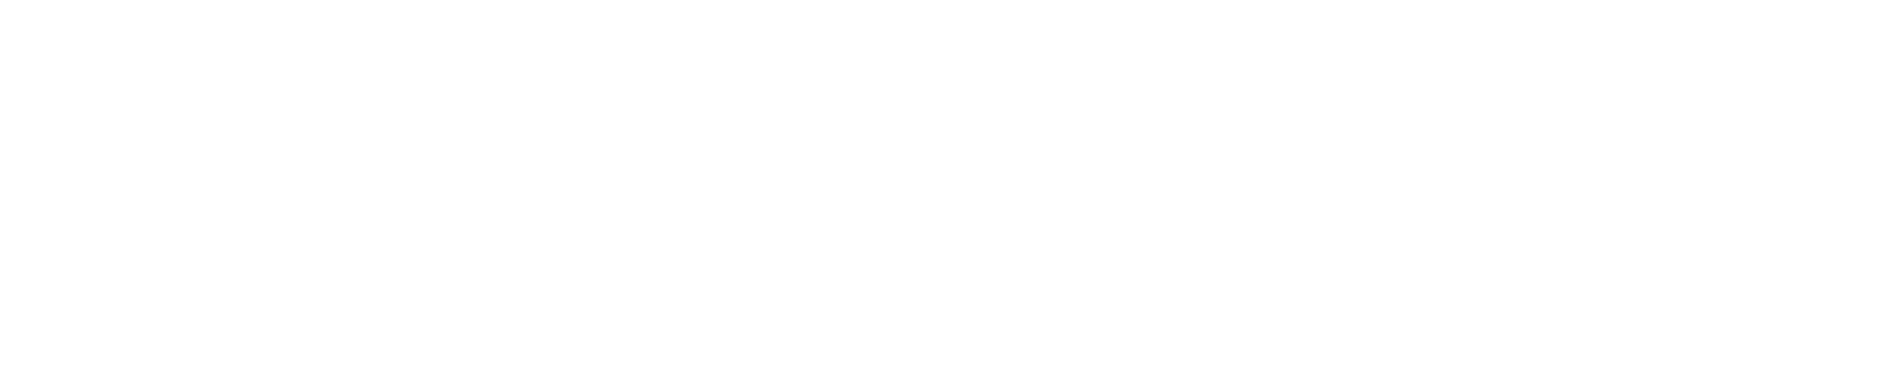 39 North Capital